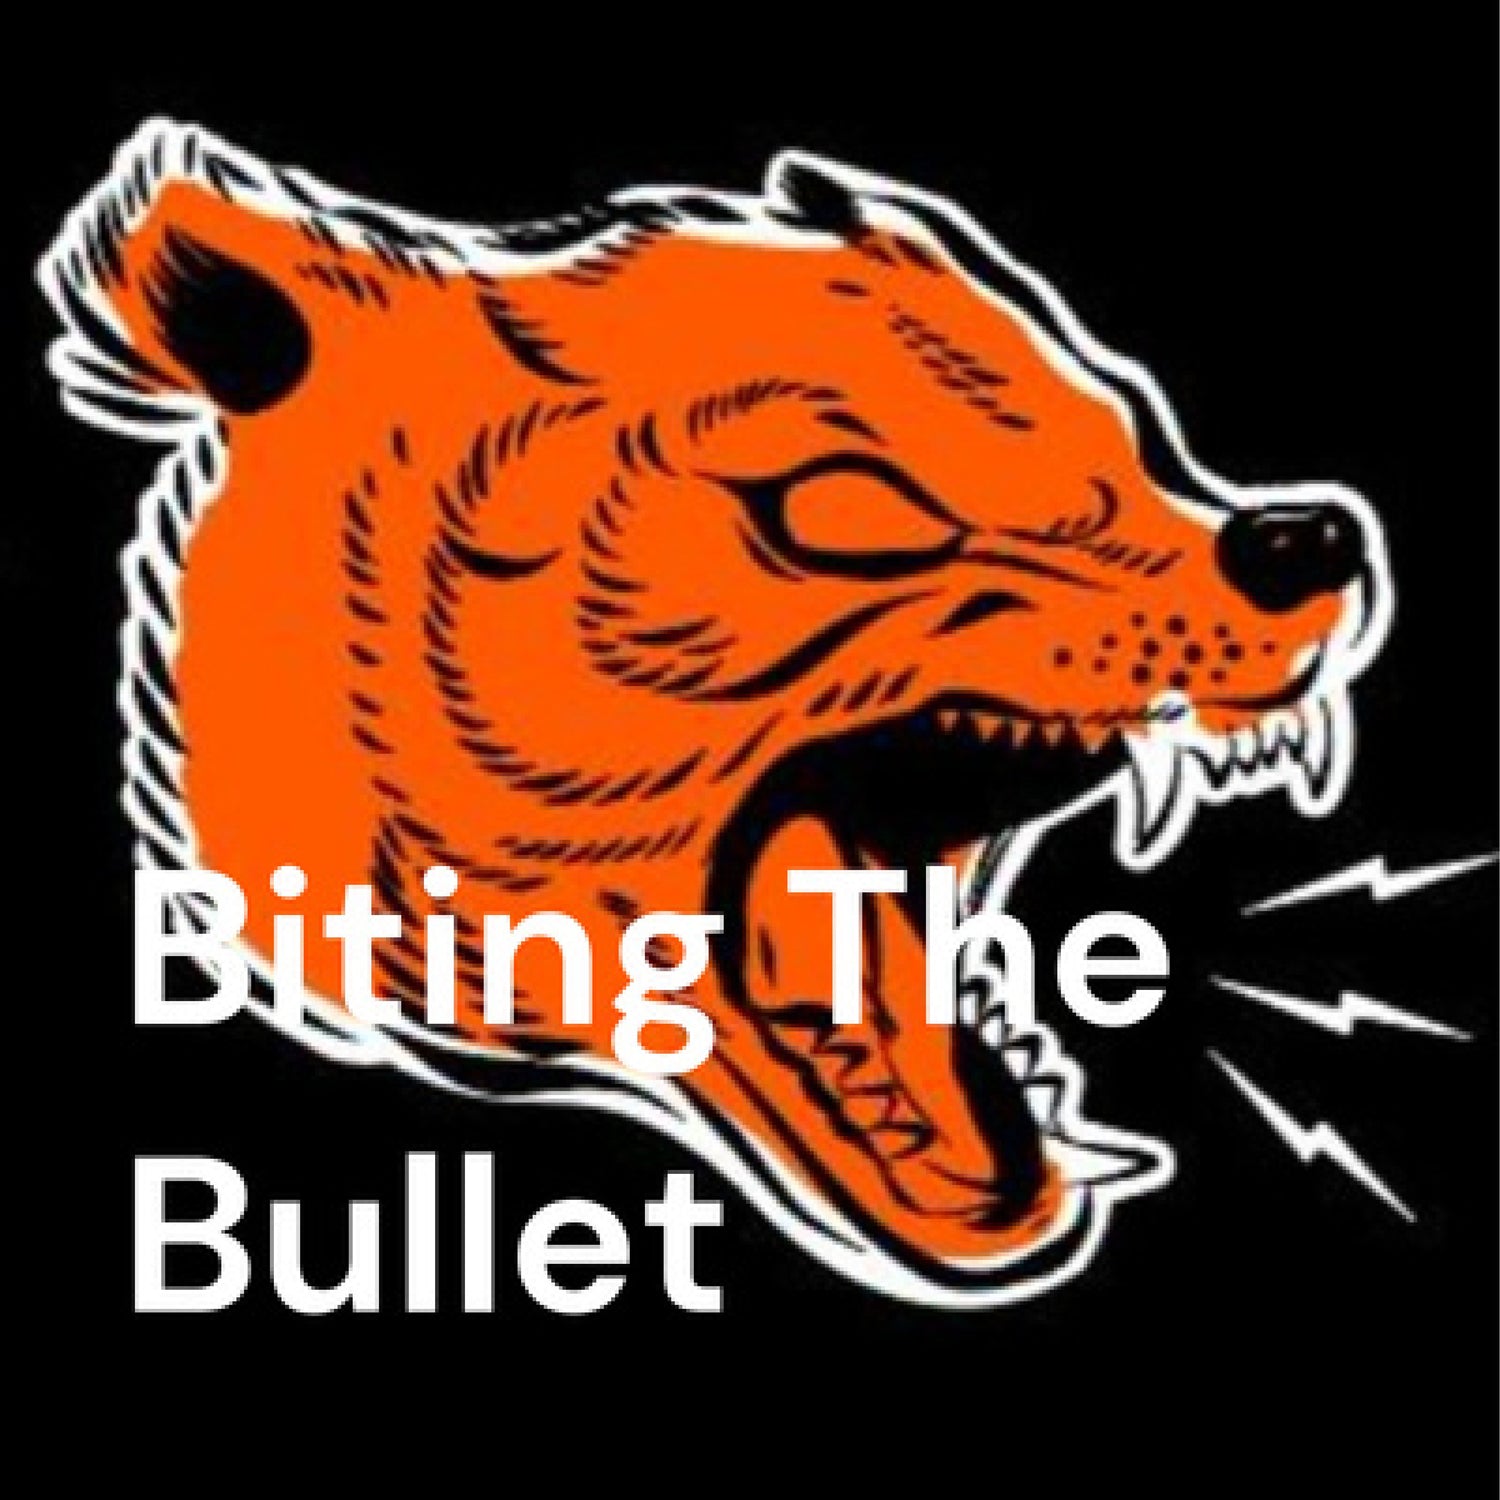 Biting the Bullet